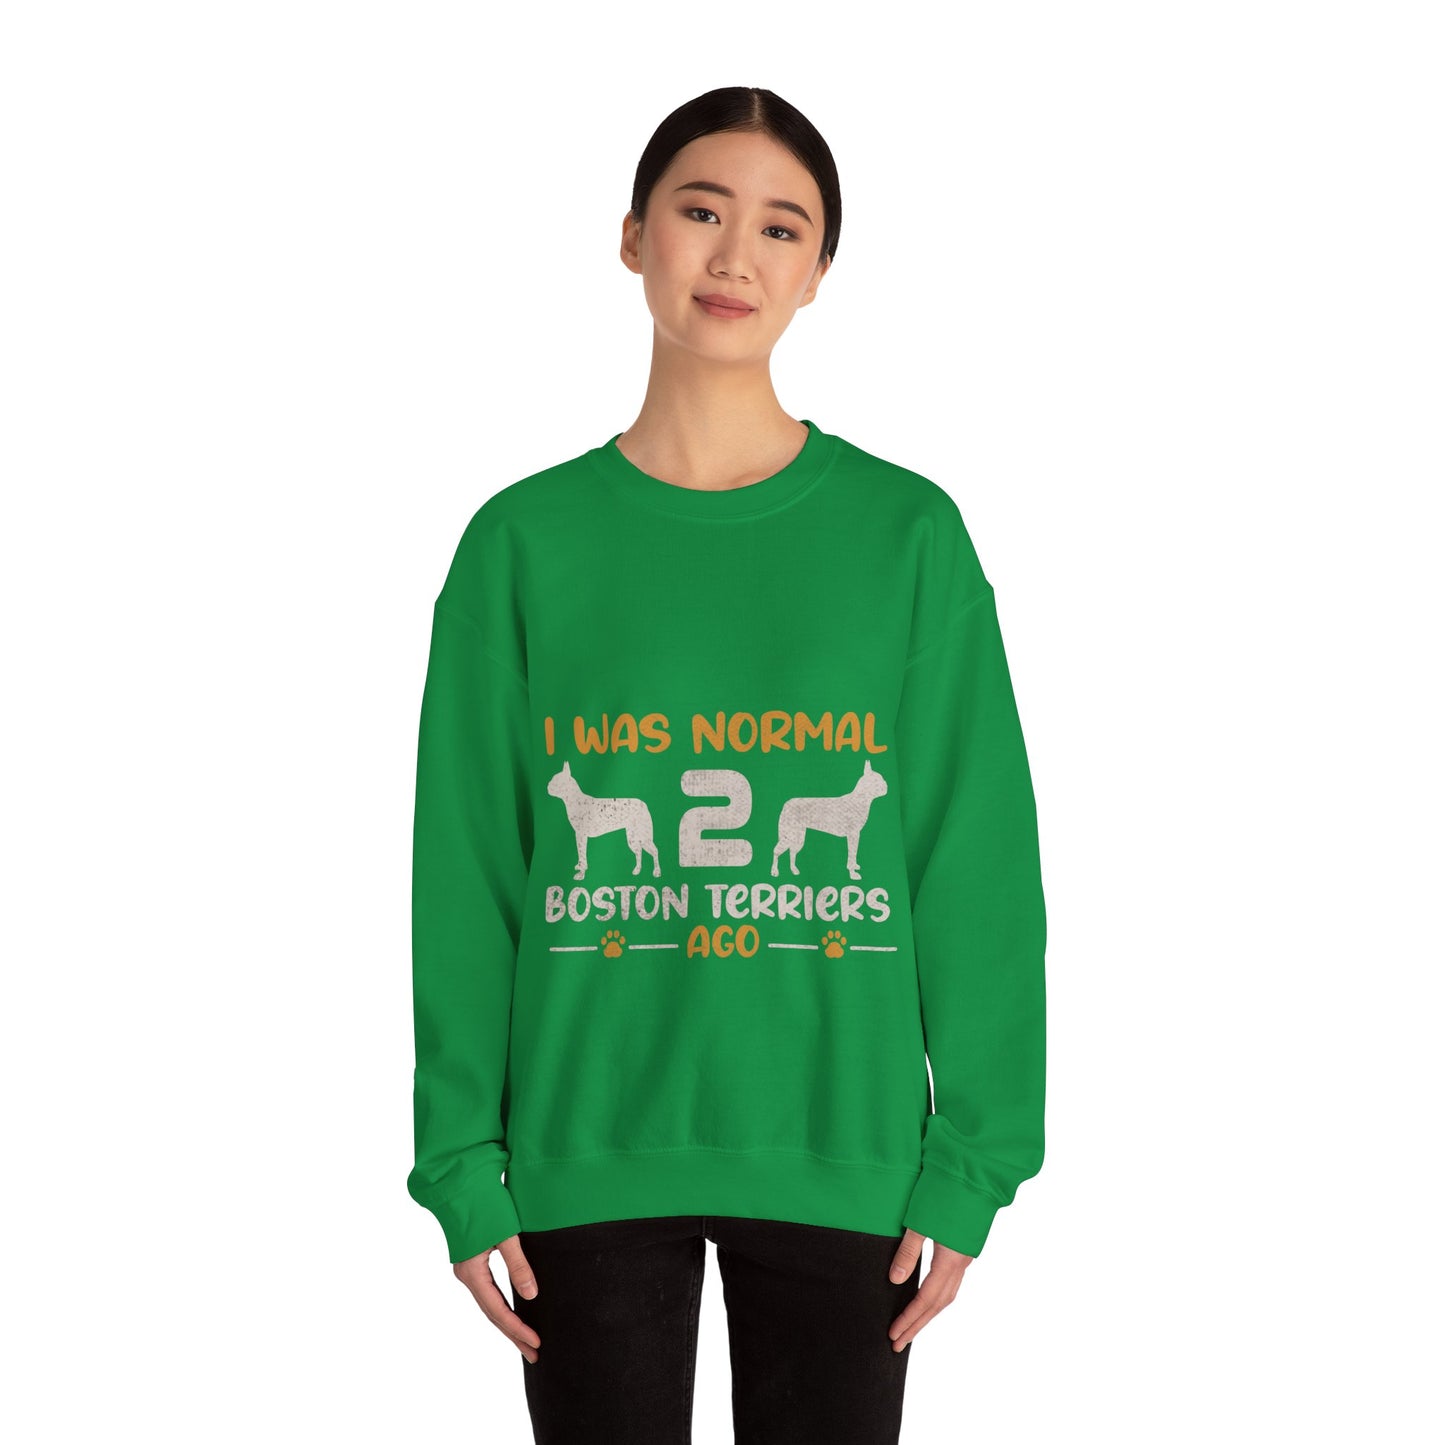 Toto - Unisex Sweatshirt for Boston Terrier lovers